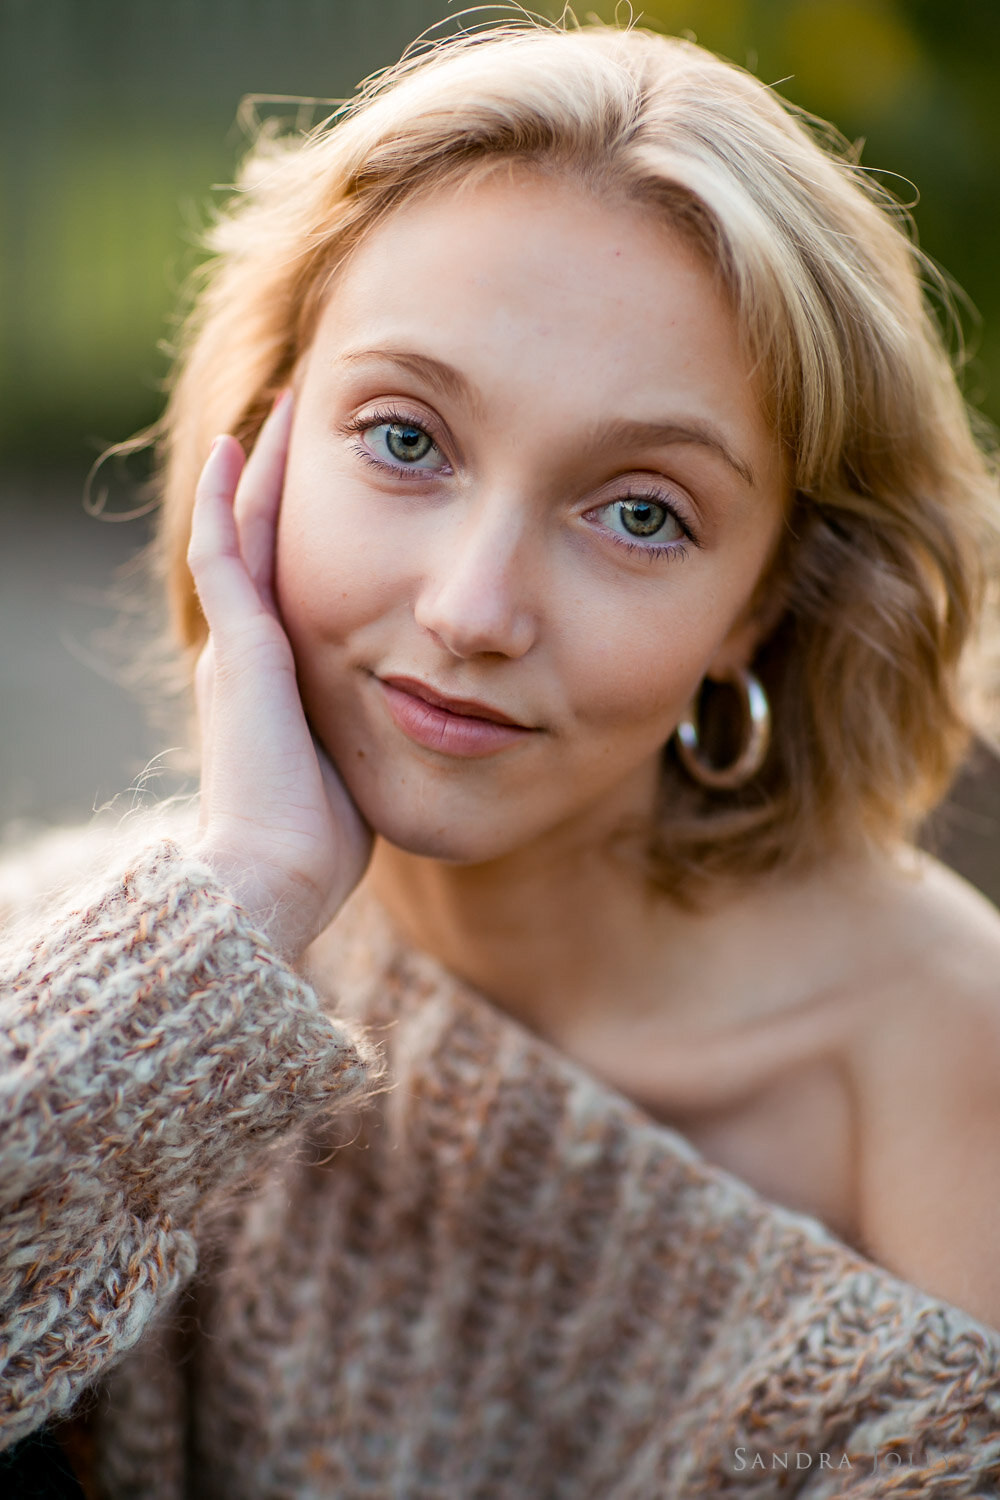 close-up-portrait-of-blonde-teenage-girl-by-sandra-jolly-photography.jpg